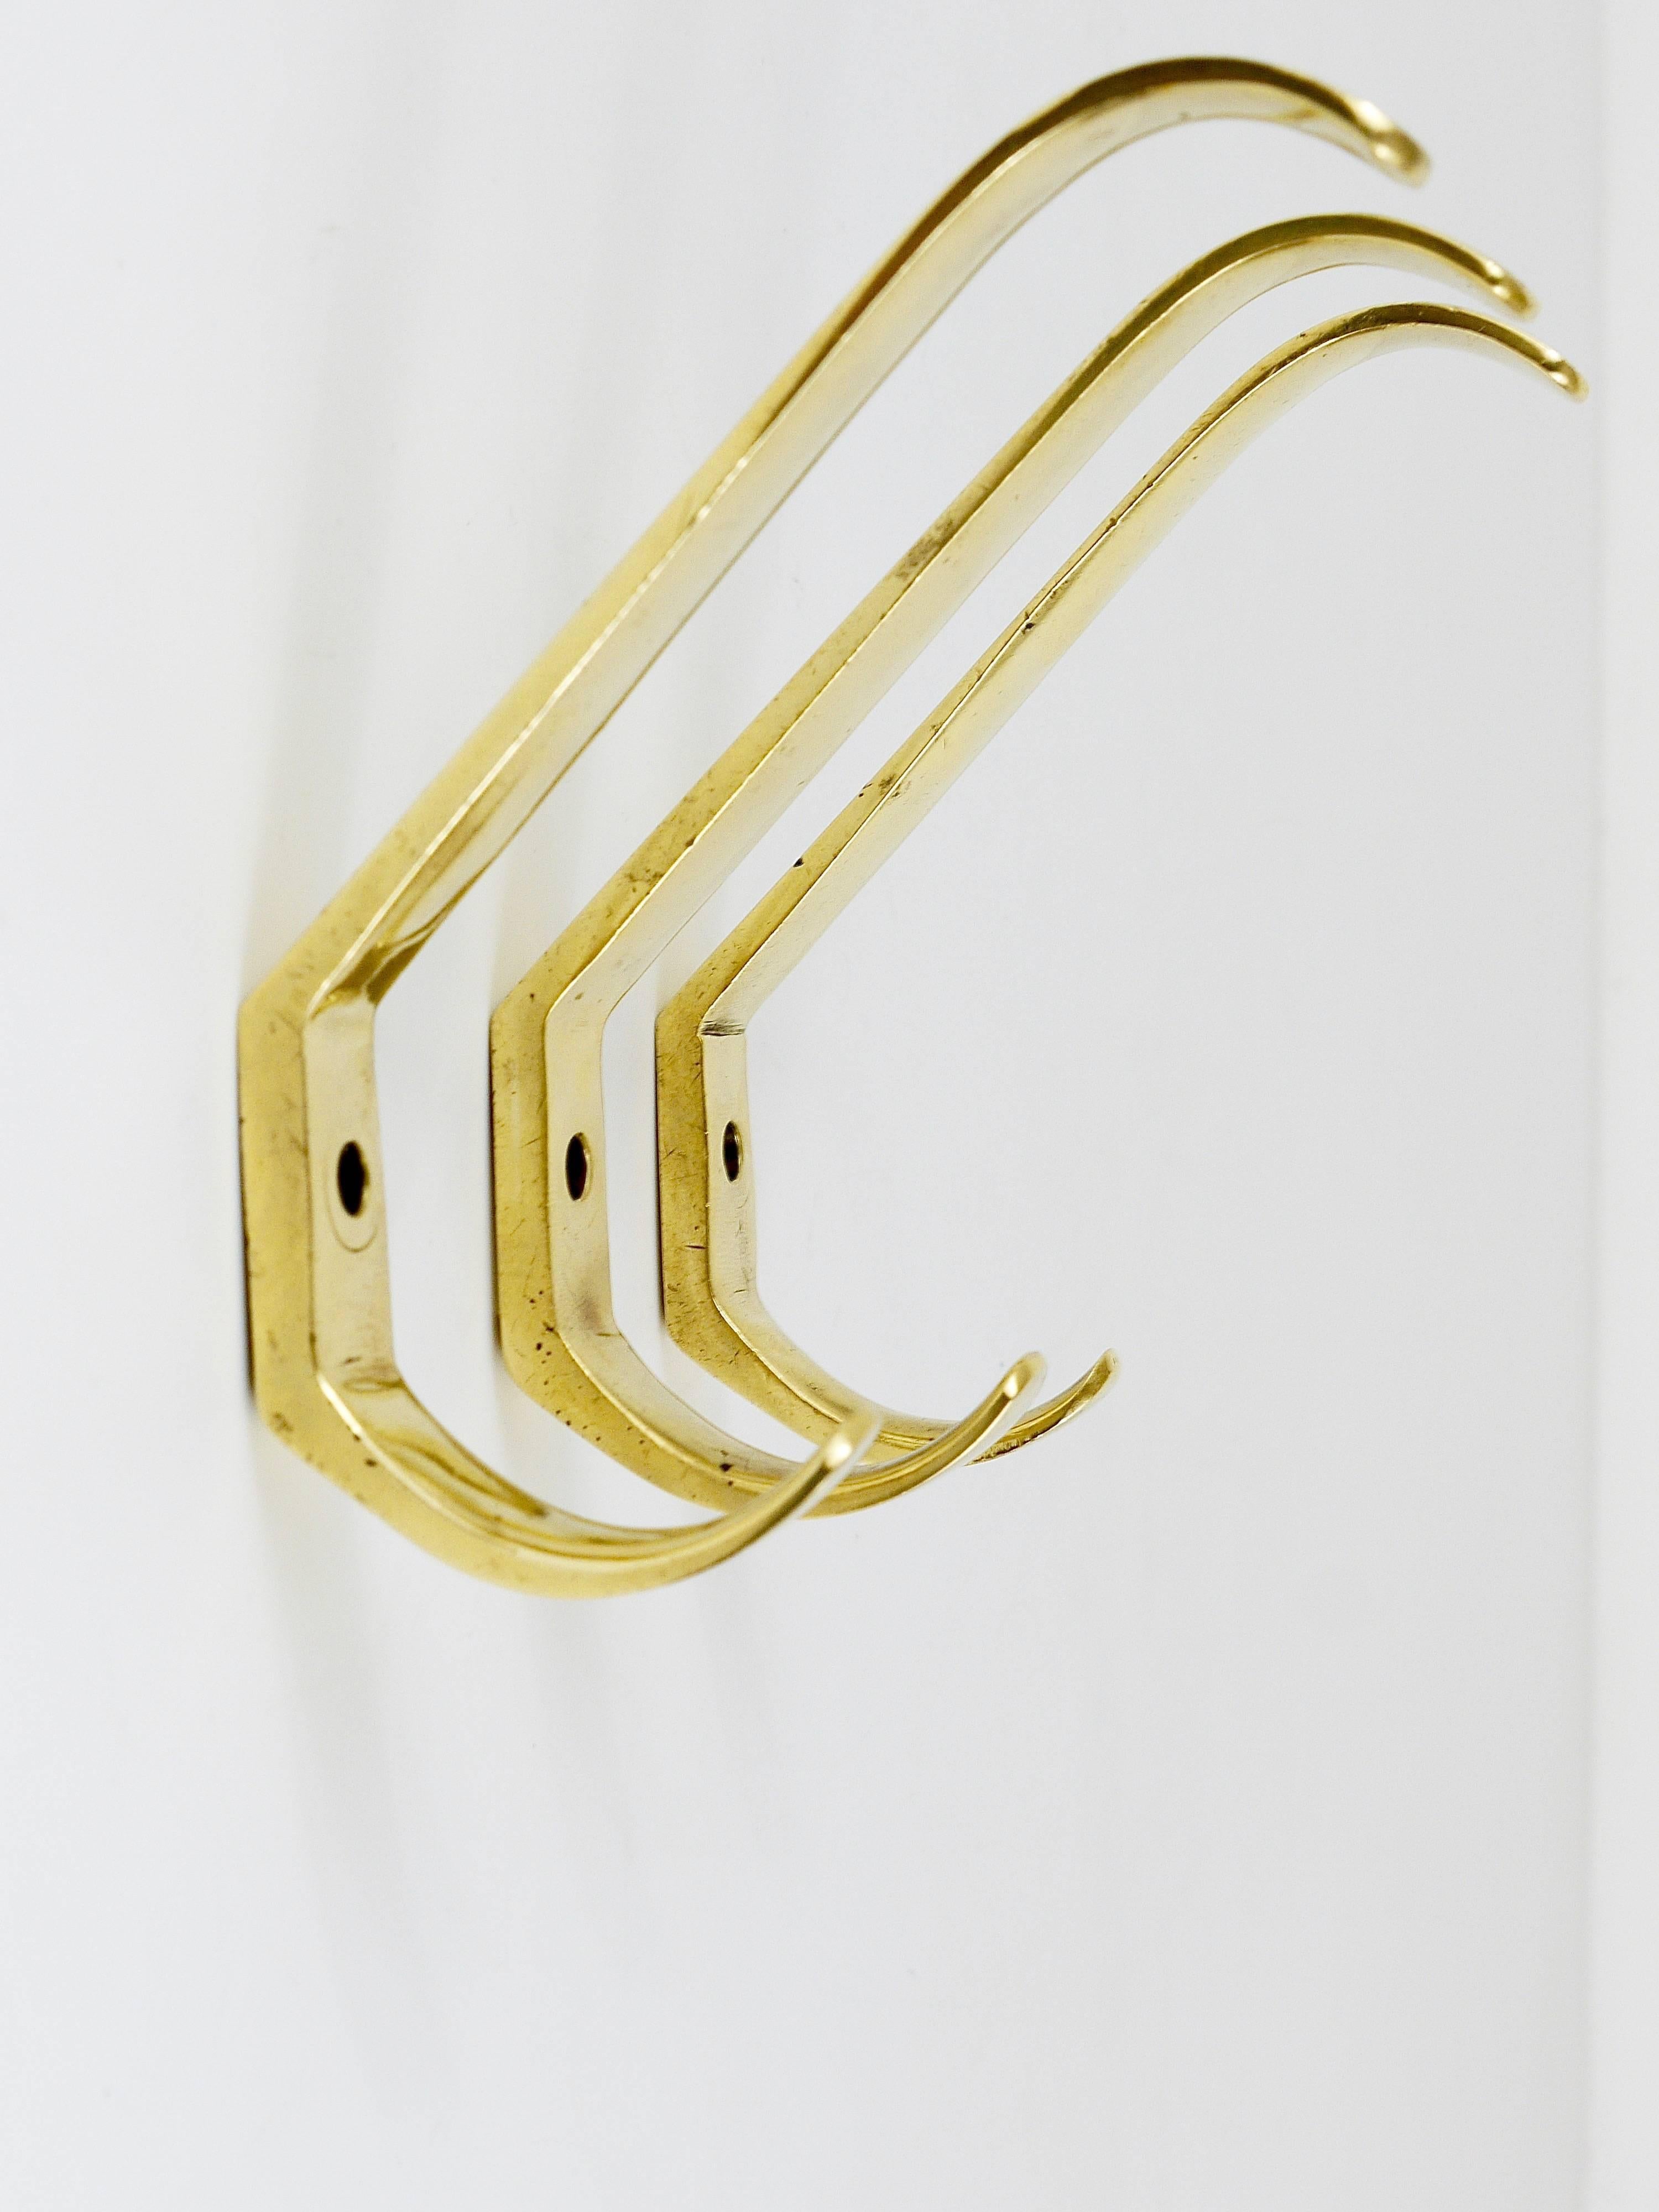 Three Midcentury Brass Wall Coat Hooks by Herta Baller Vienna Austria, 1950s For Sale 4